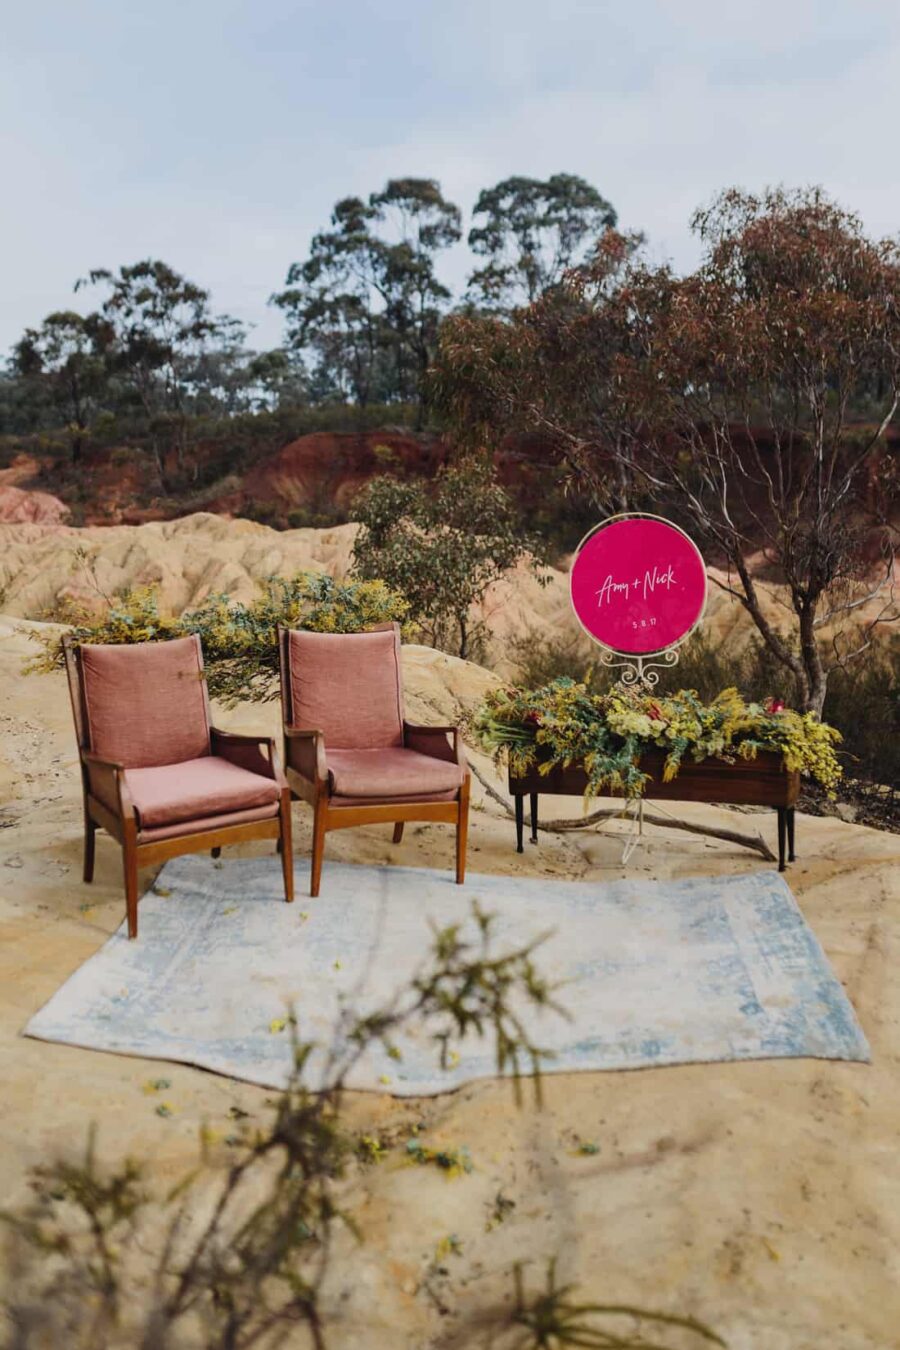 retro Australiana wedding inspiration at Heathcote’s Pink Cliffs